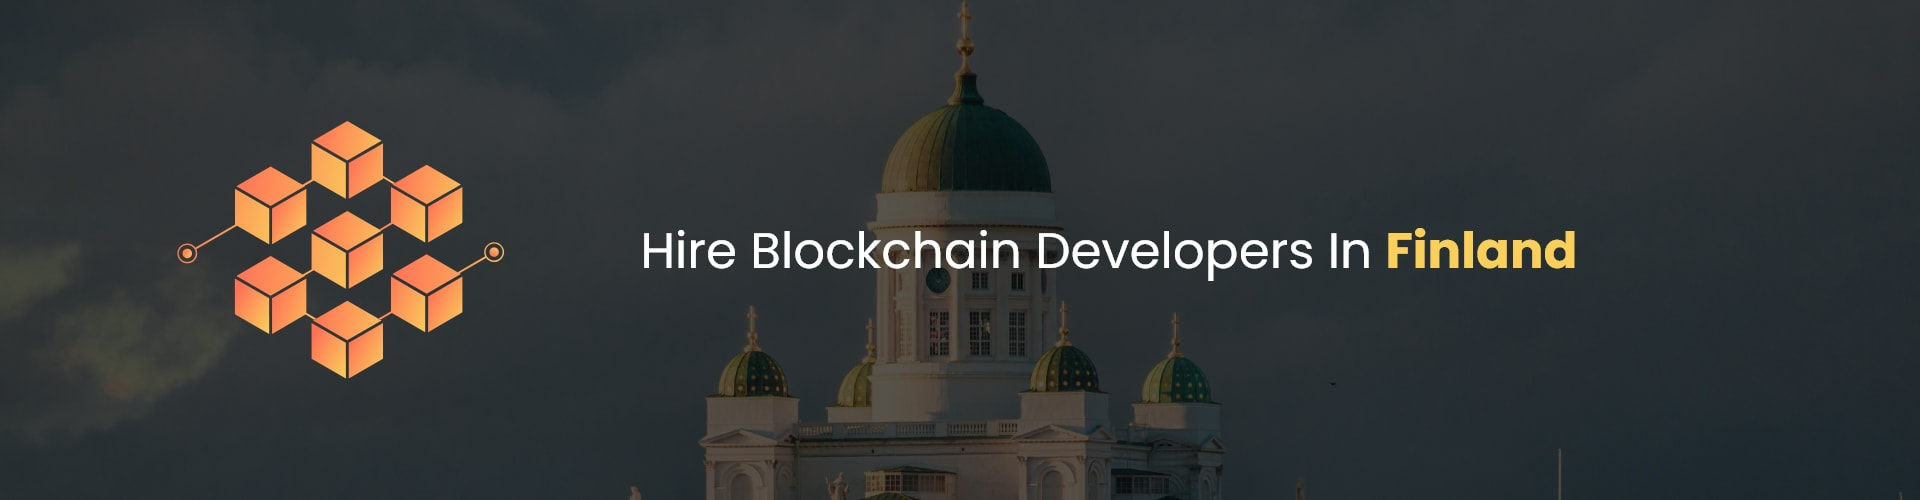 hire blockchain developers in finland